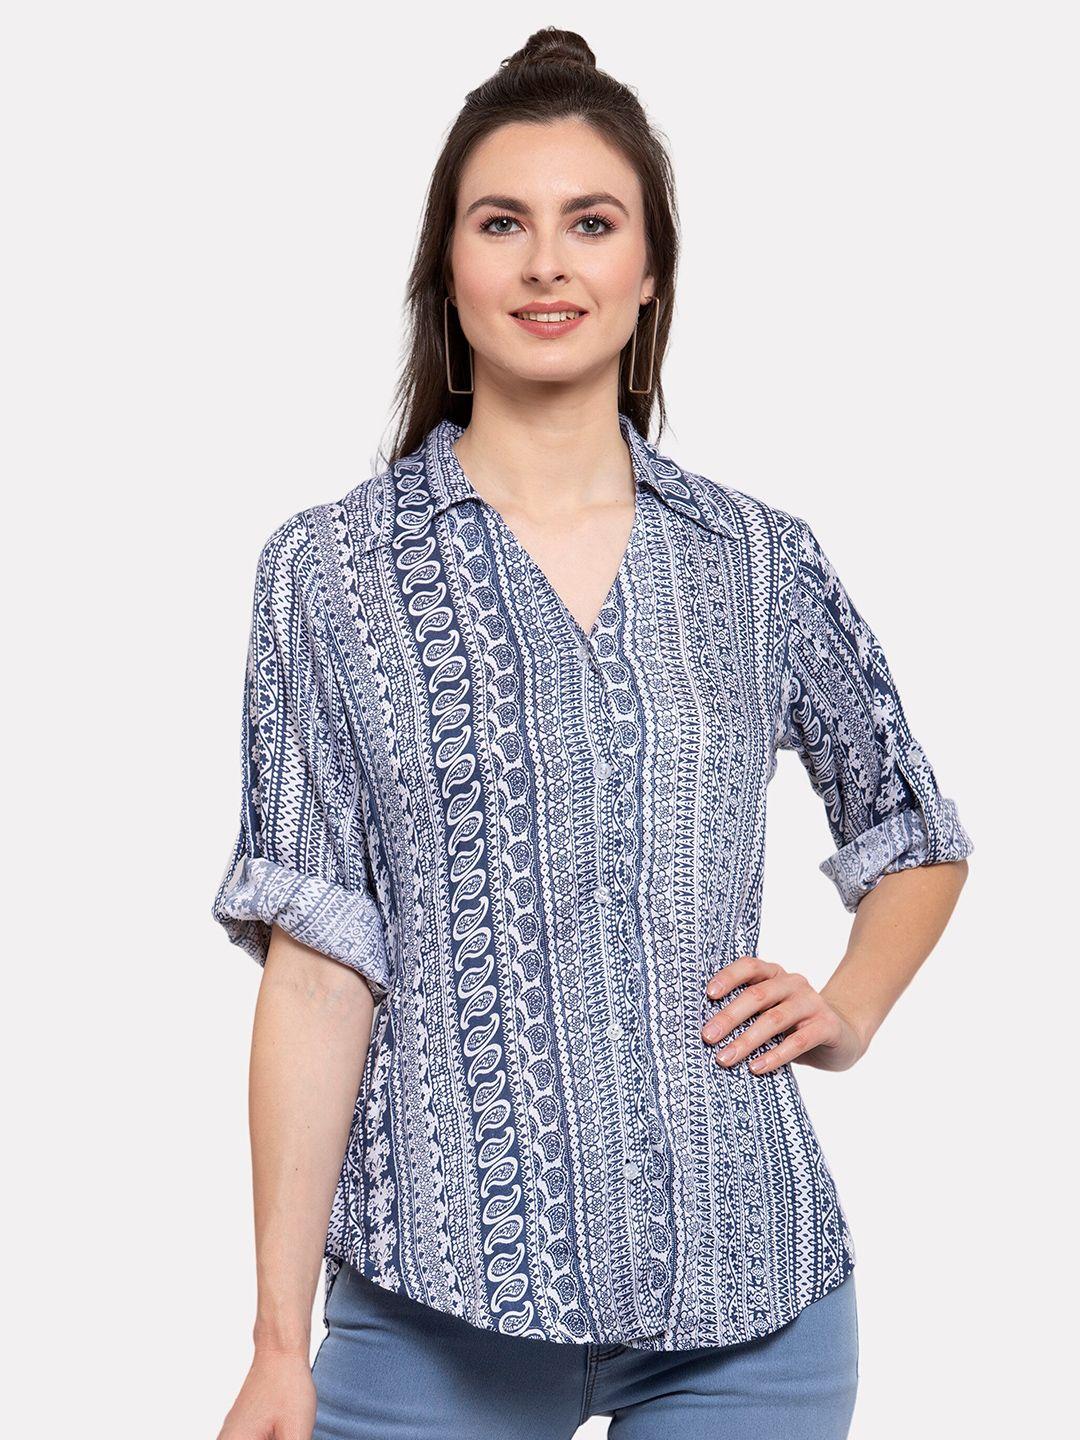 patrorna women multicoloured comfort printed casual shirt